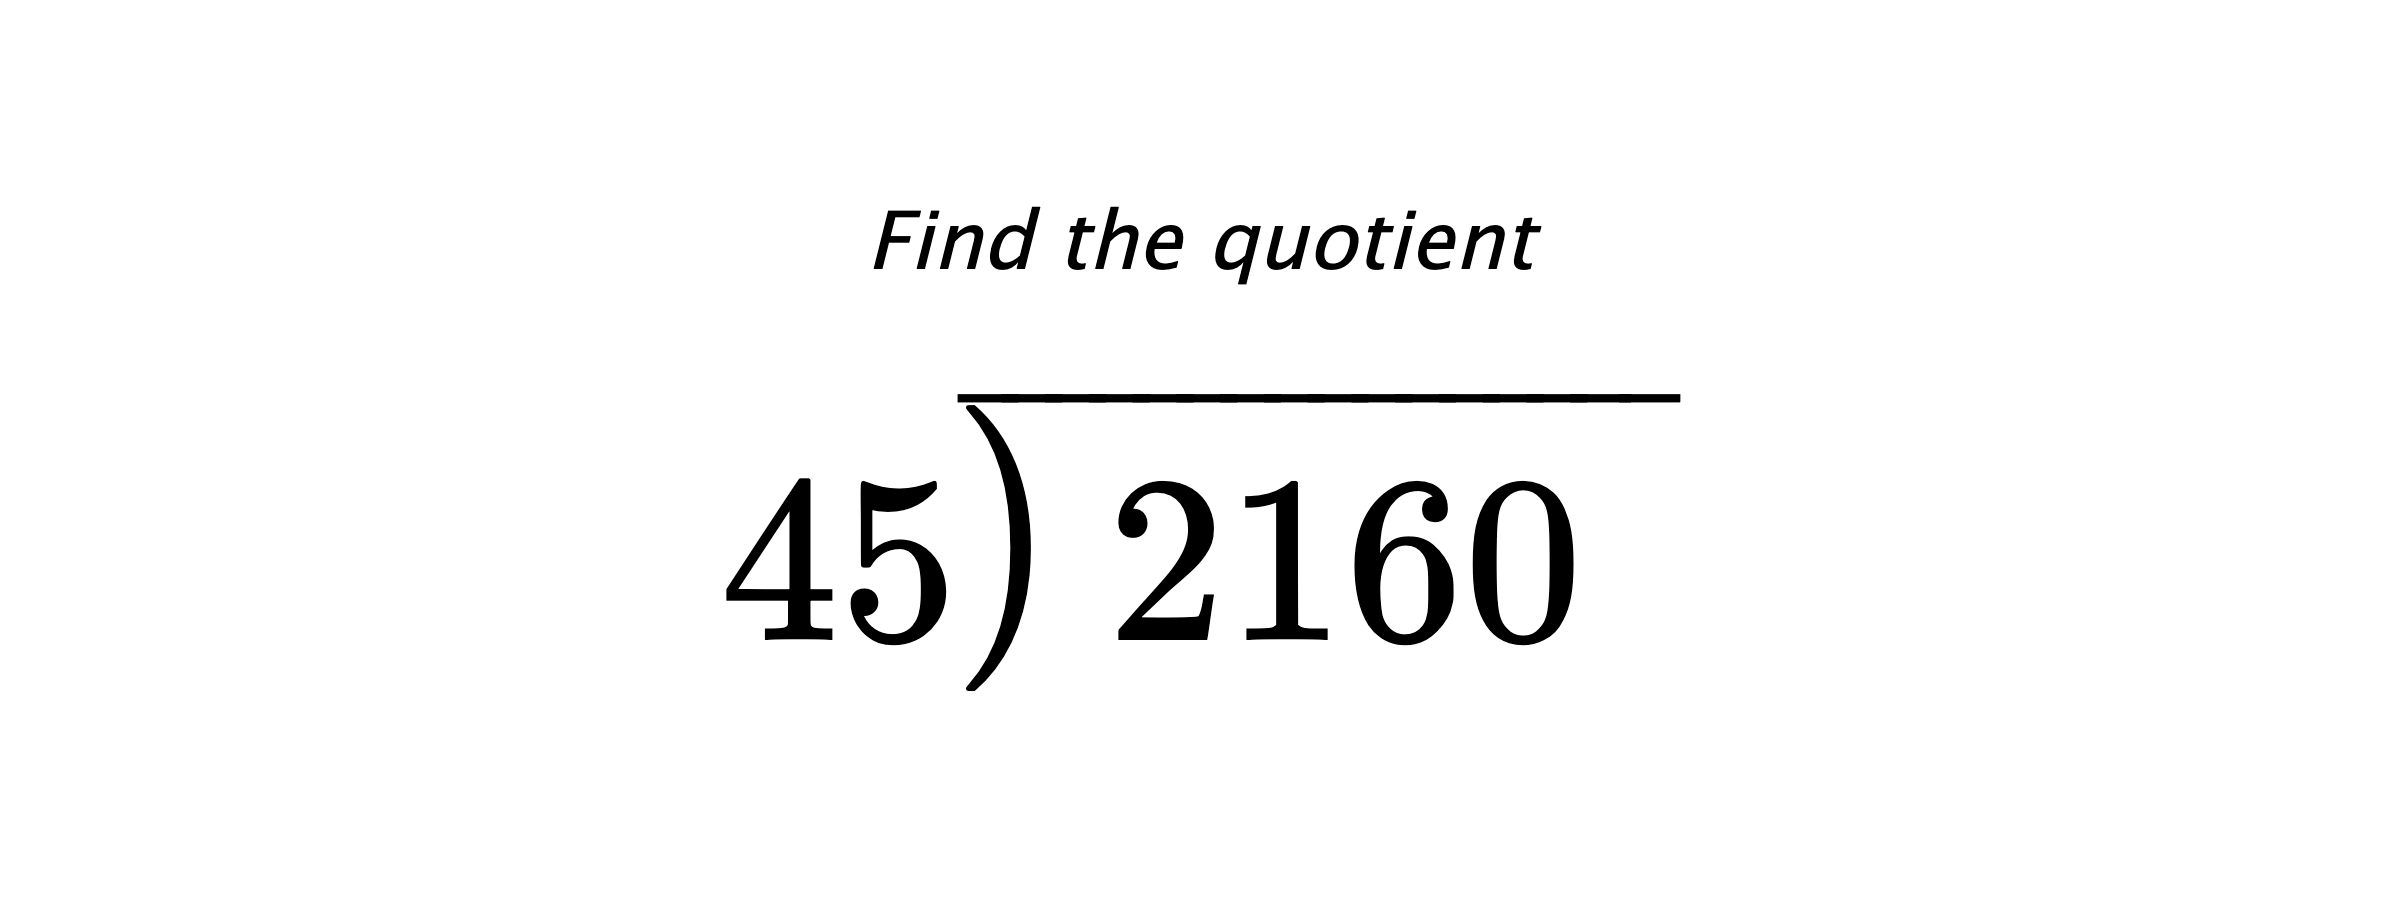 Find the quotient $ 45{\overline{\smash{\raise.3ex\hbox{$\big)$}}\,2160\phantom{)}}} $